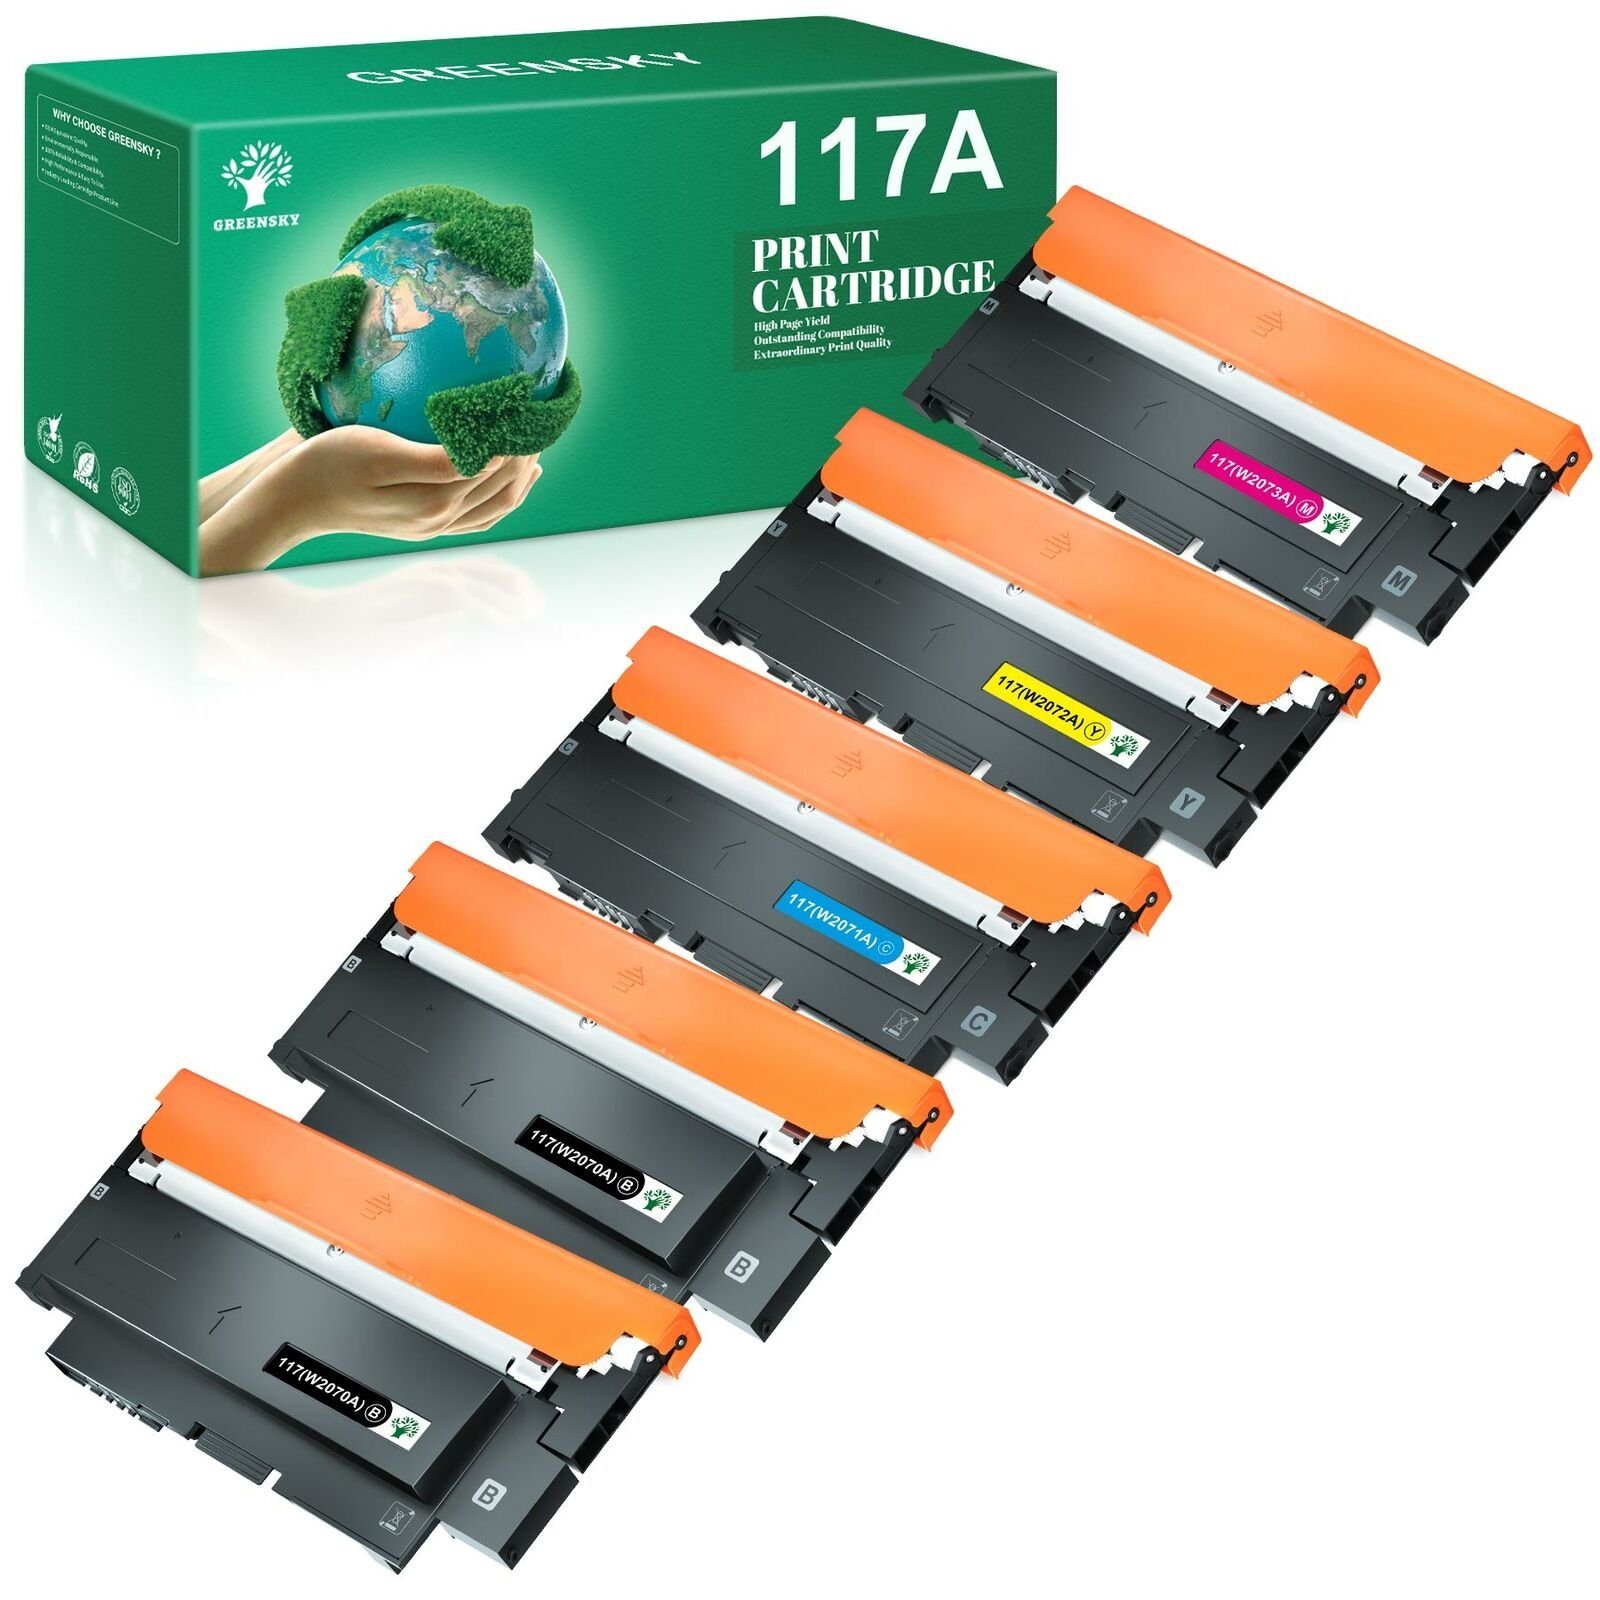 Greensky Tonerkartusche für HP 117A Color Laser 150a 150w 150nw 178nw 179fnw Farblaserdrucker